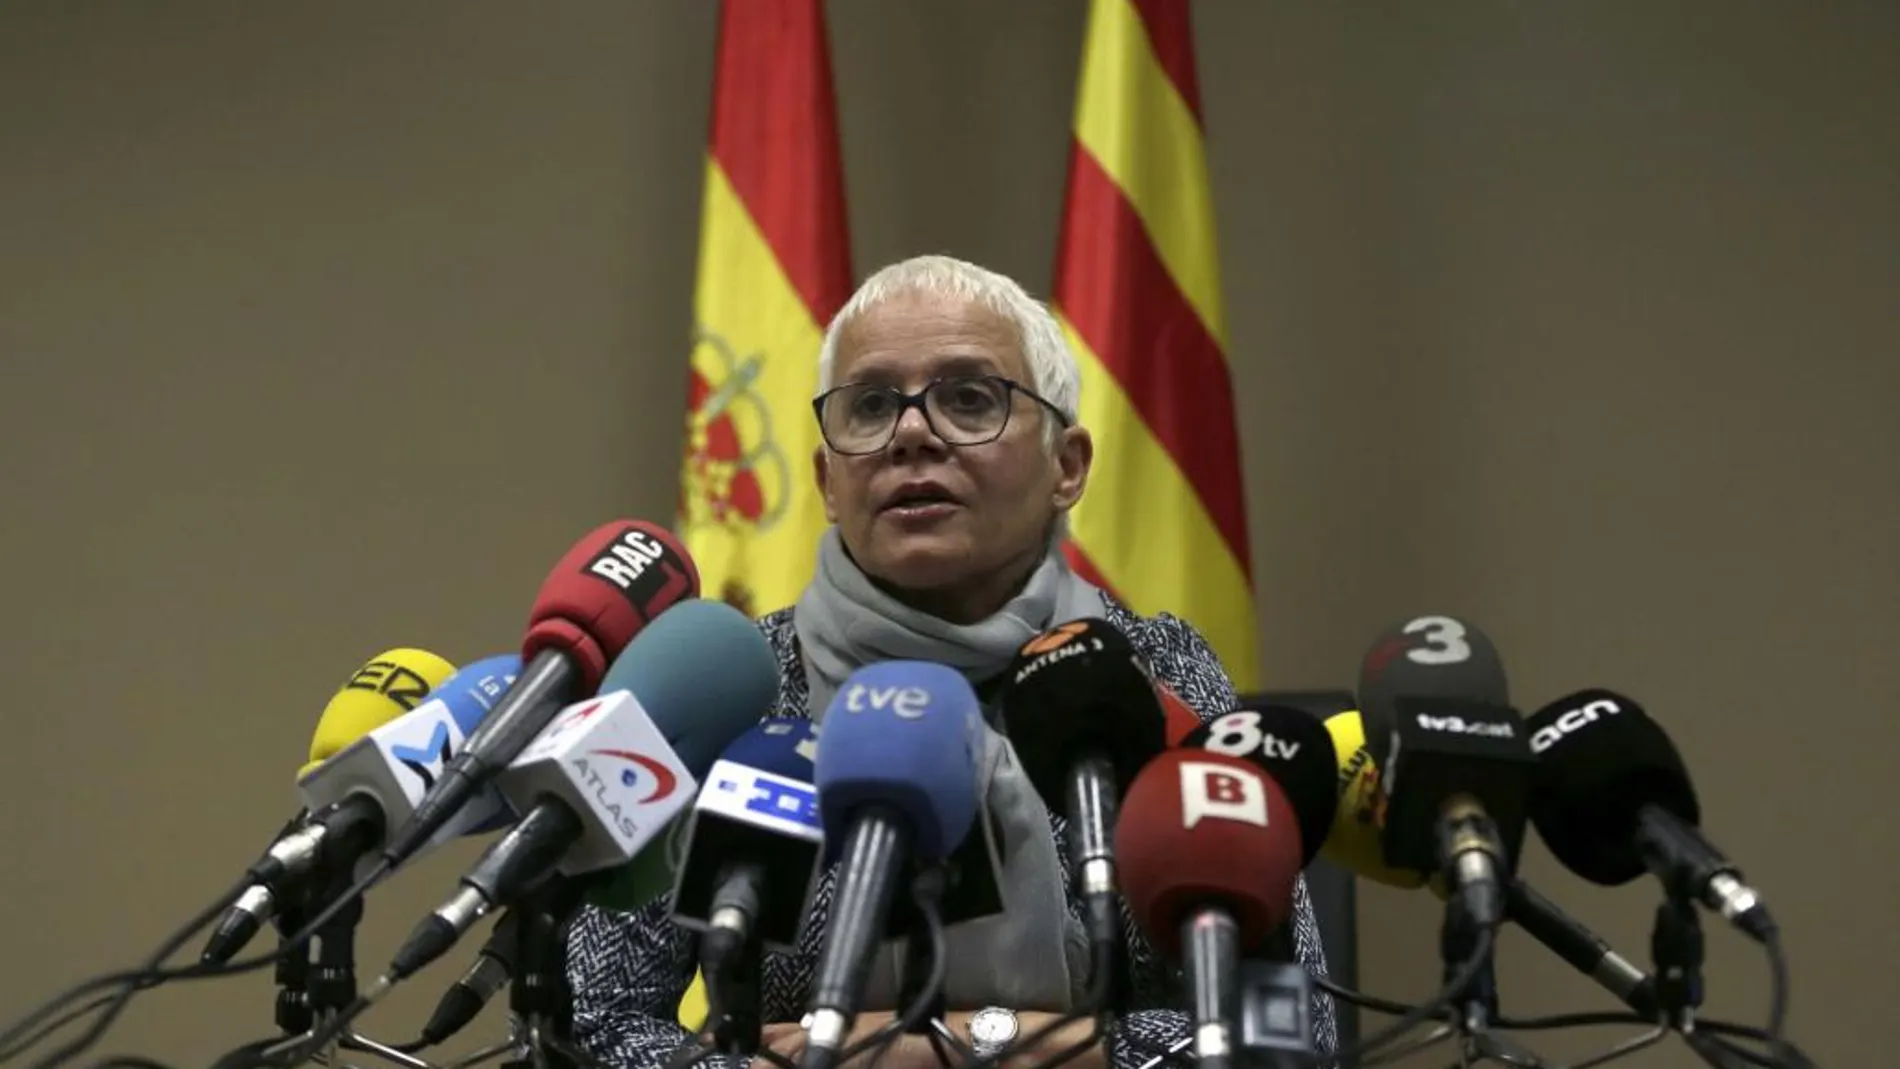 La Fiscal Jefe de Barcelona, Ana Magaldi, den una imagen de archivo